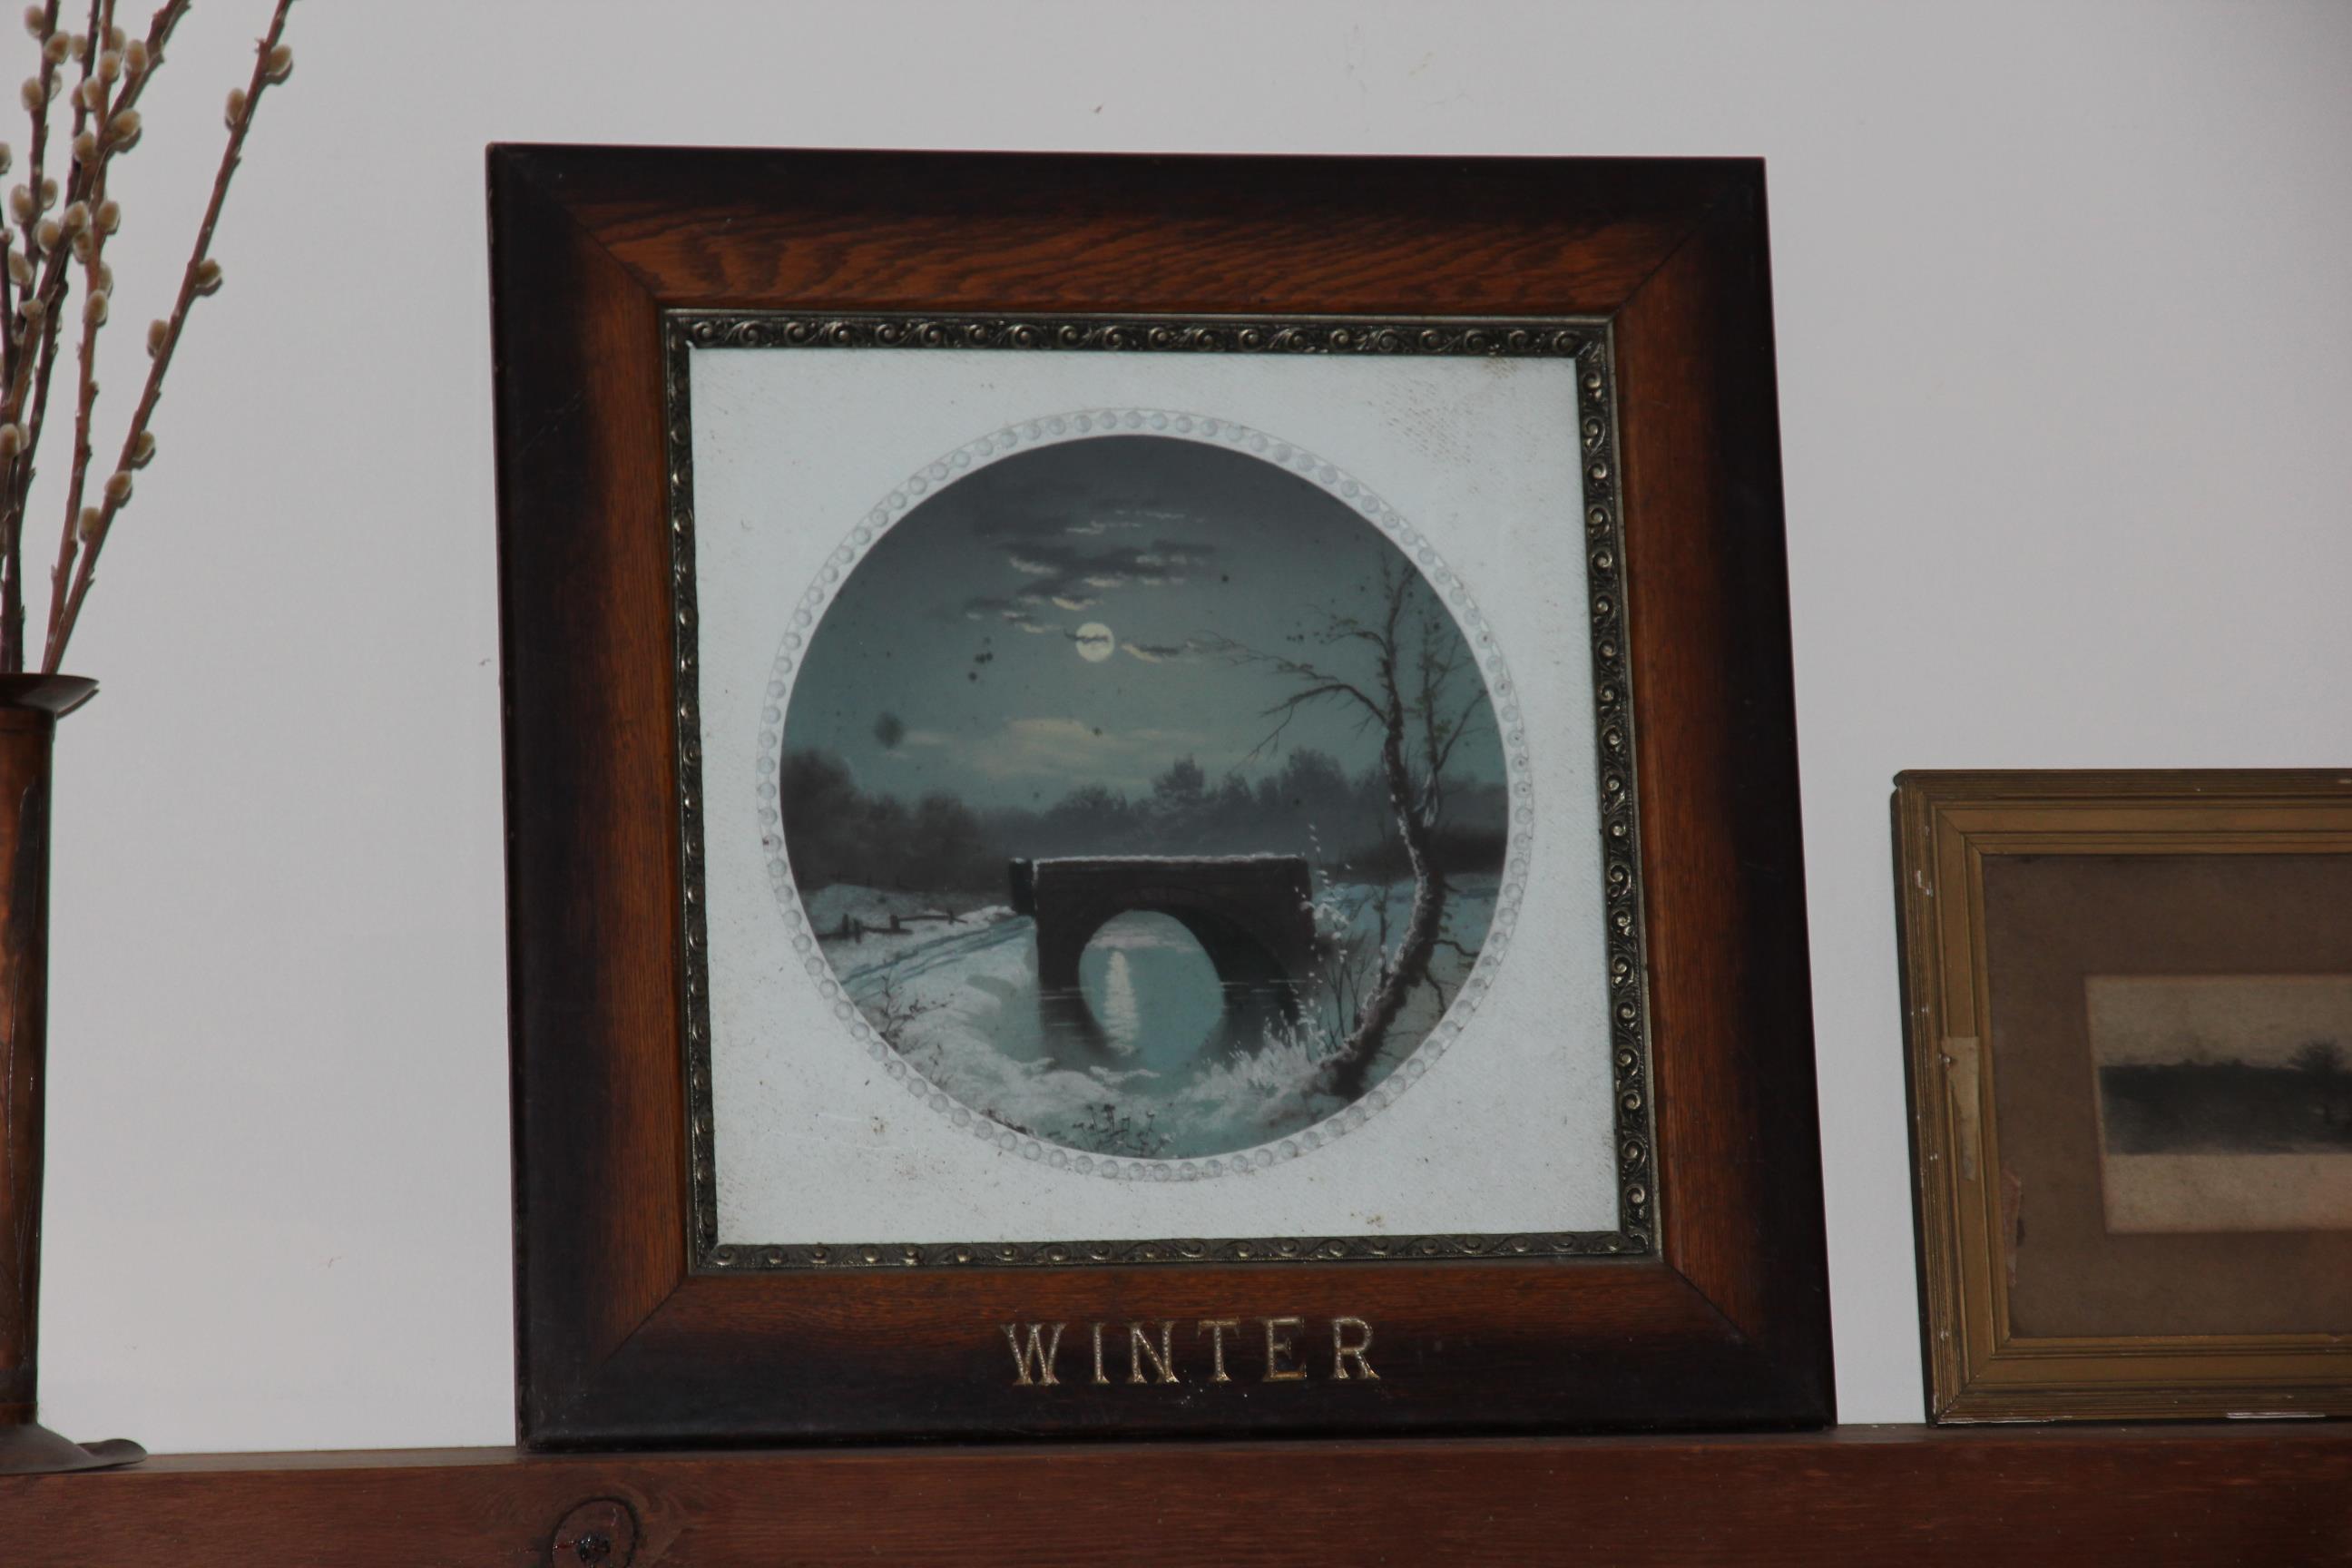 Antique winter scene print in charming frame